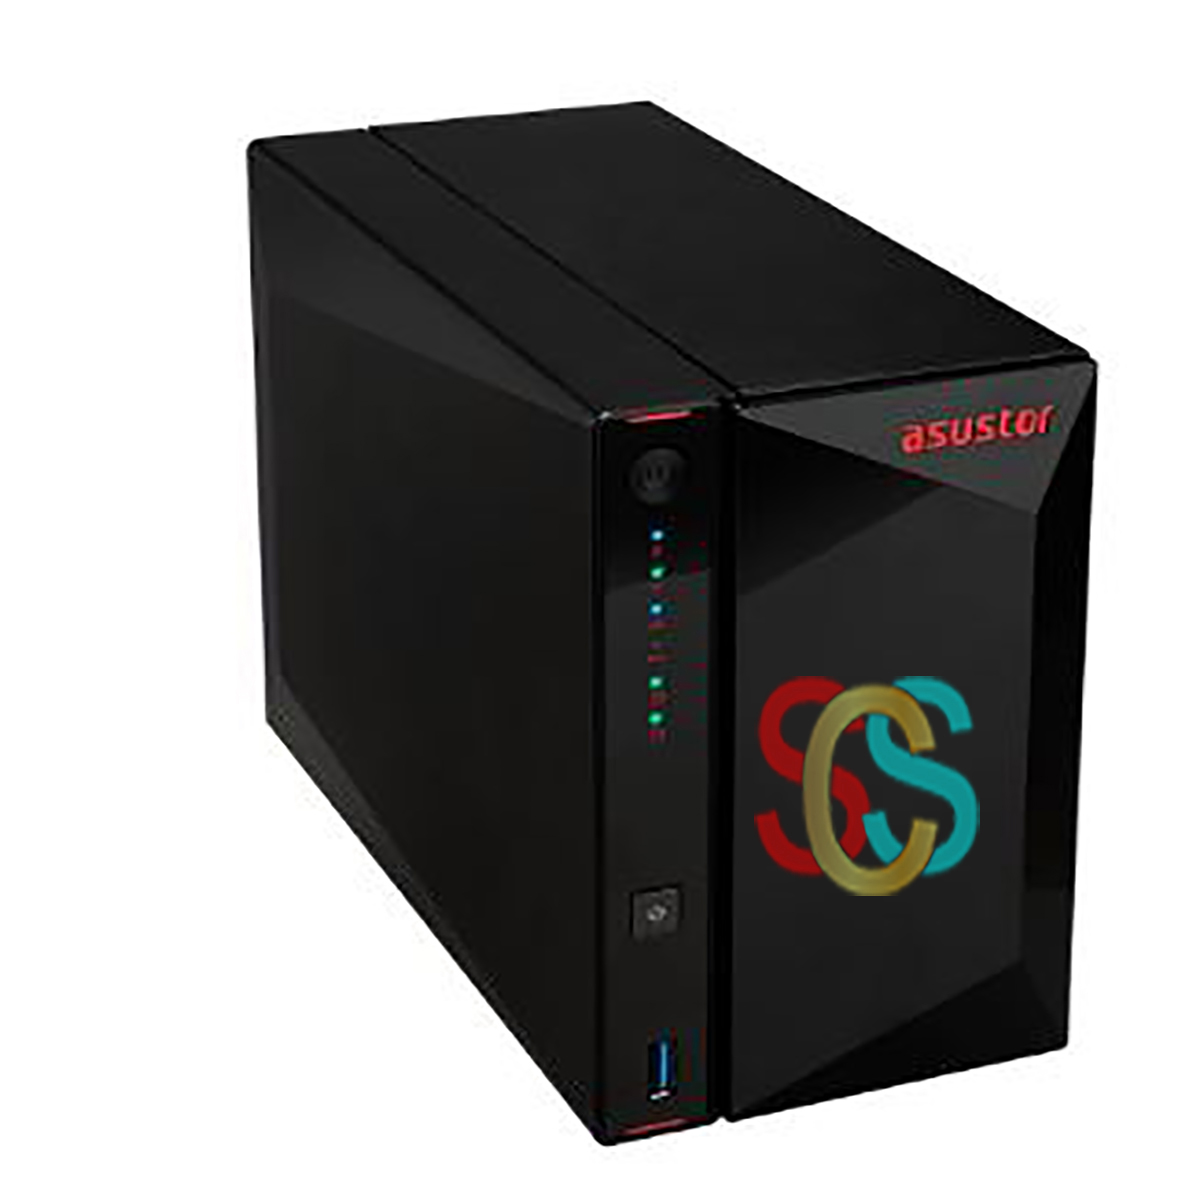 Asustor AS5202T 2 BAY Desktop Storage